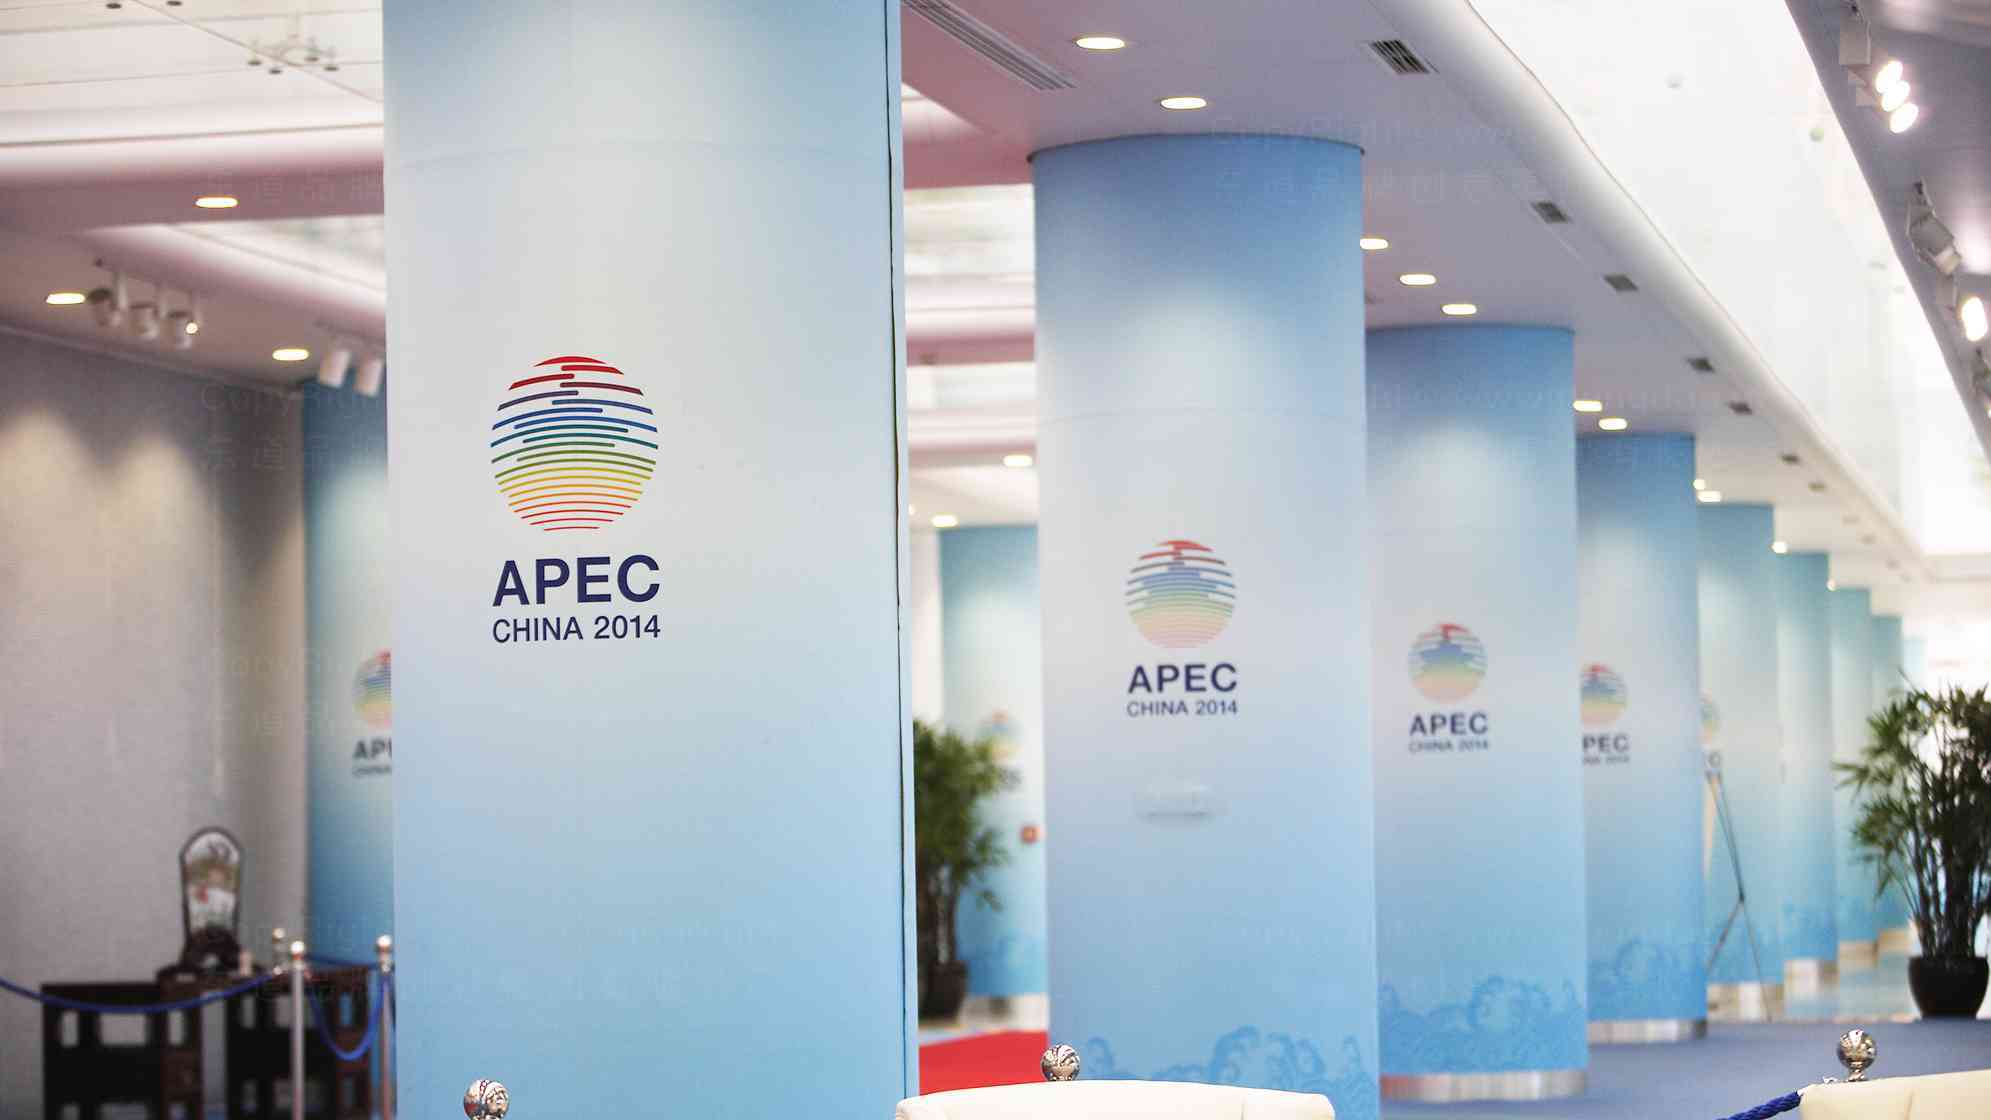 APEC China 2014会议vi设计图片素材_4